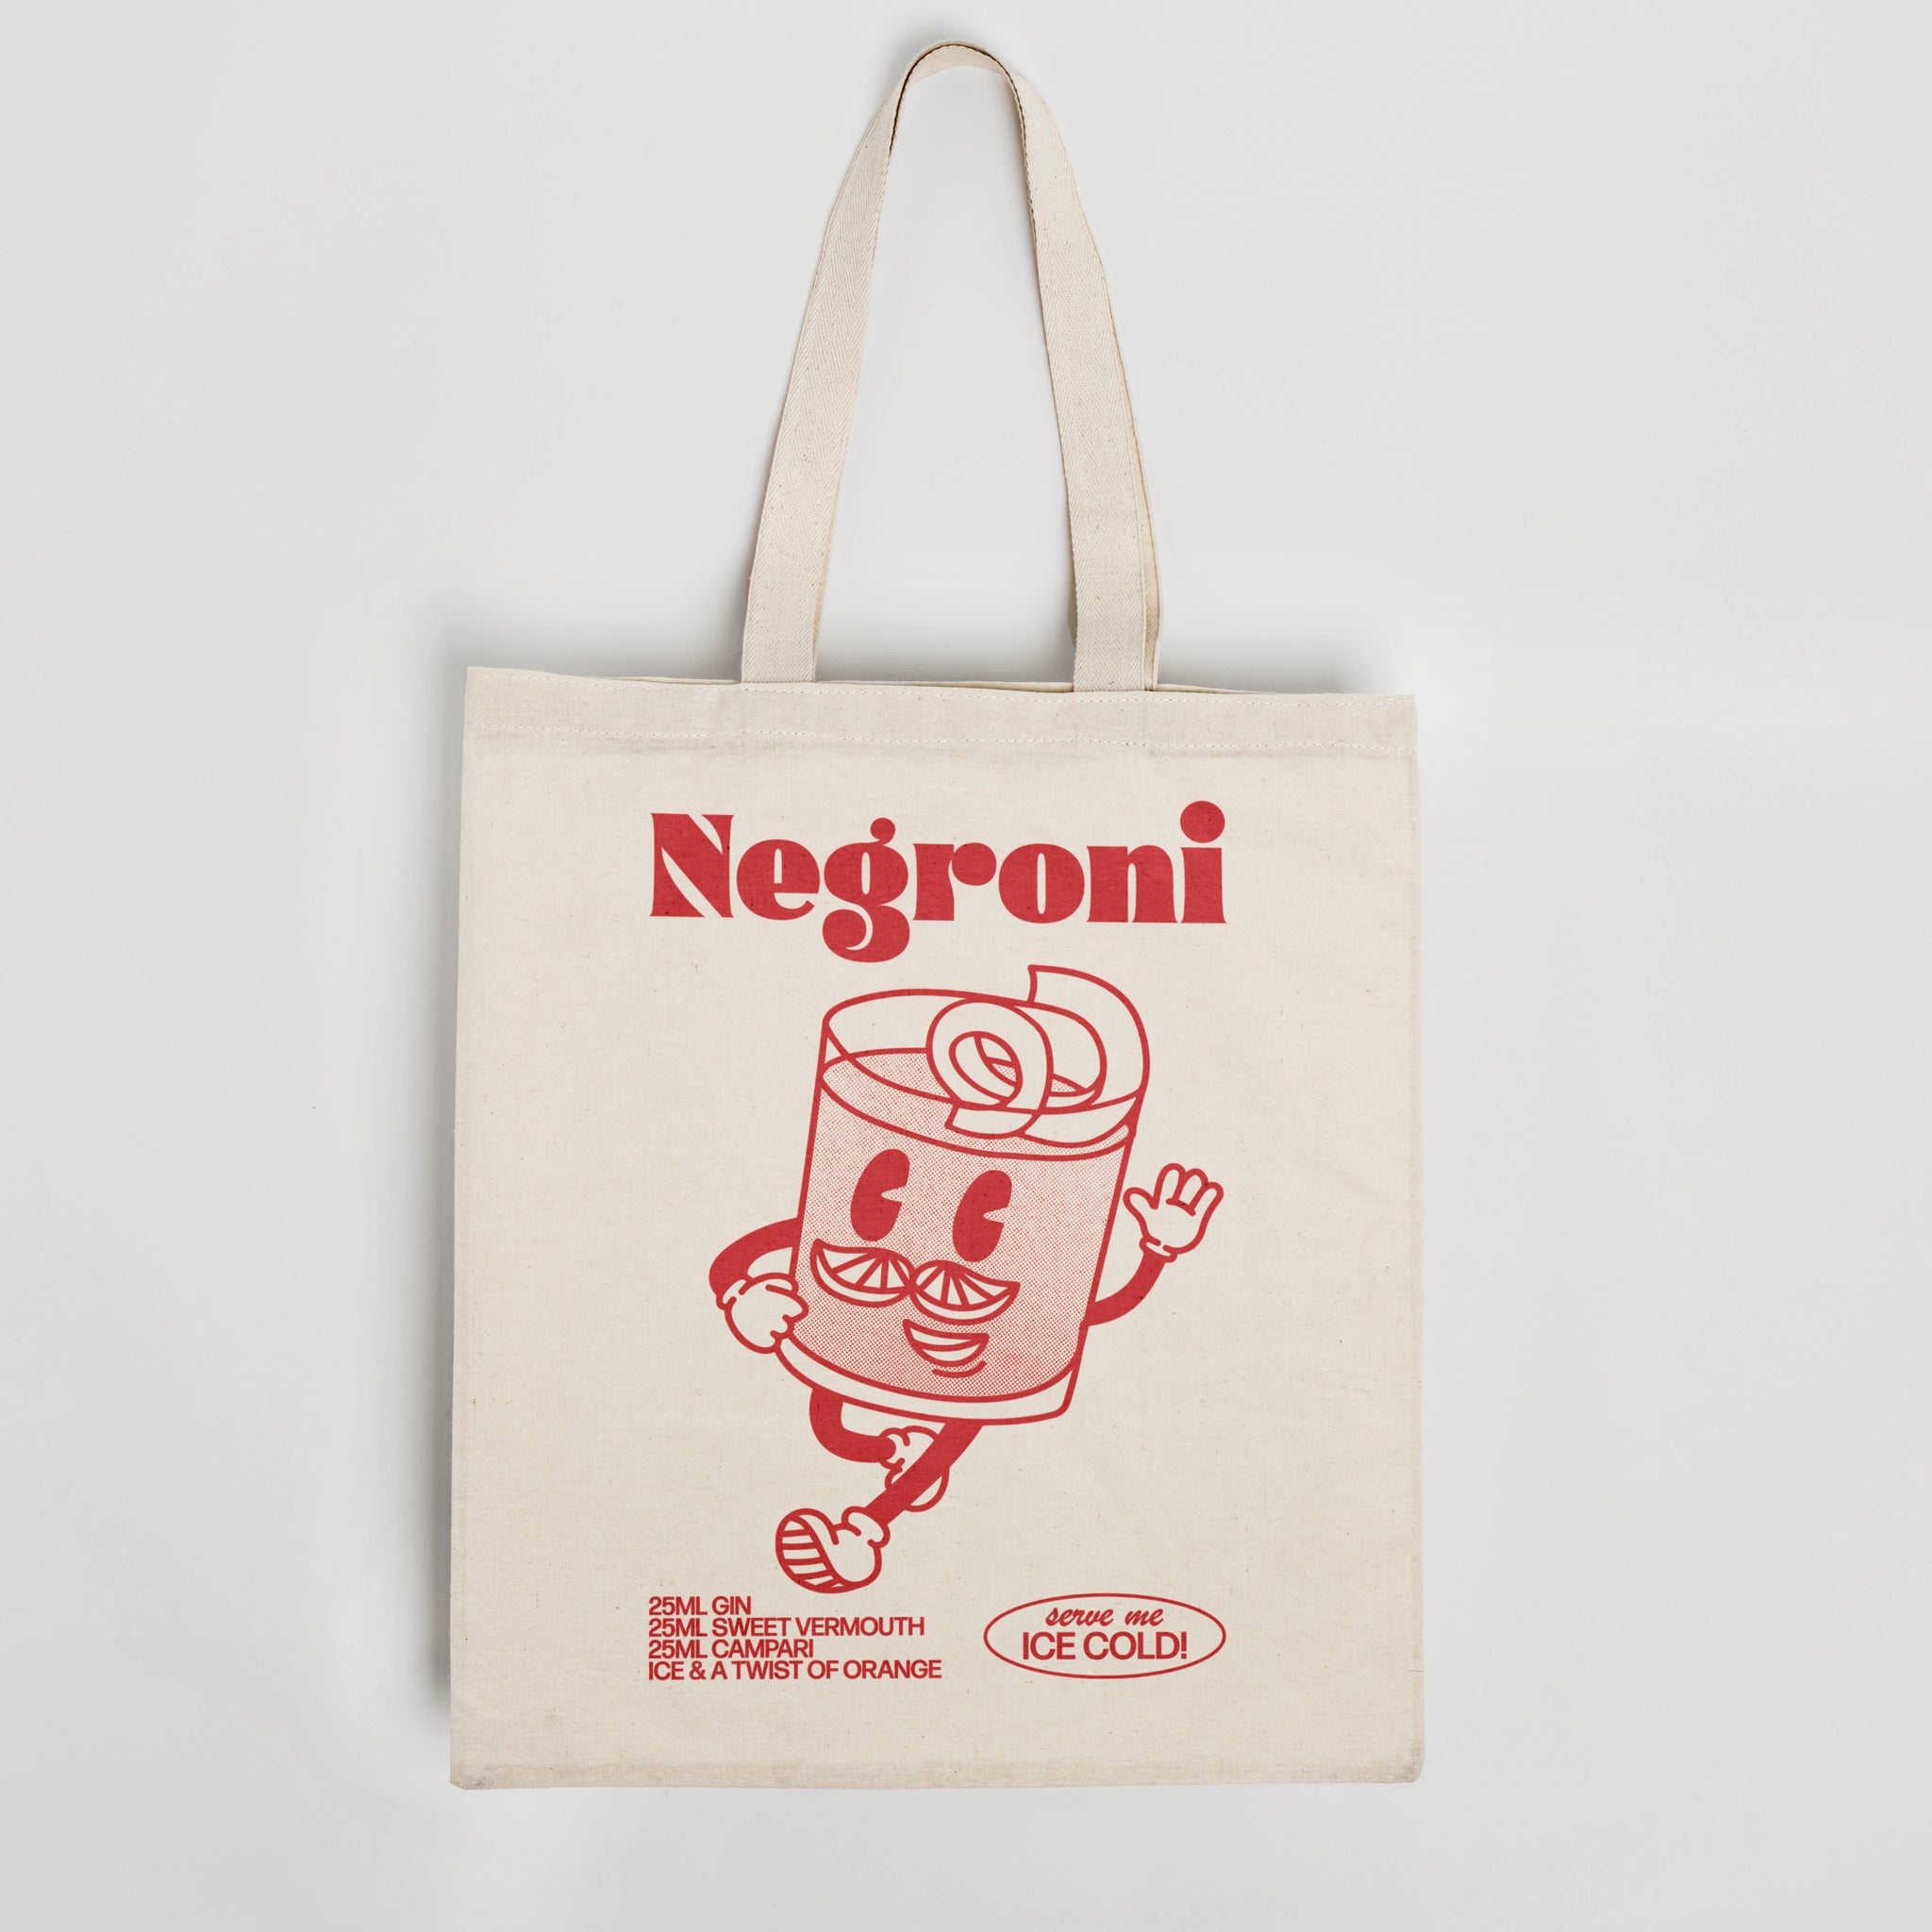 'Negroni' organic cotton canvas tote bag